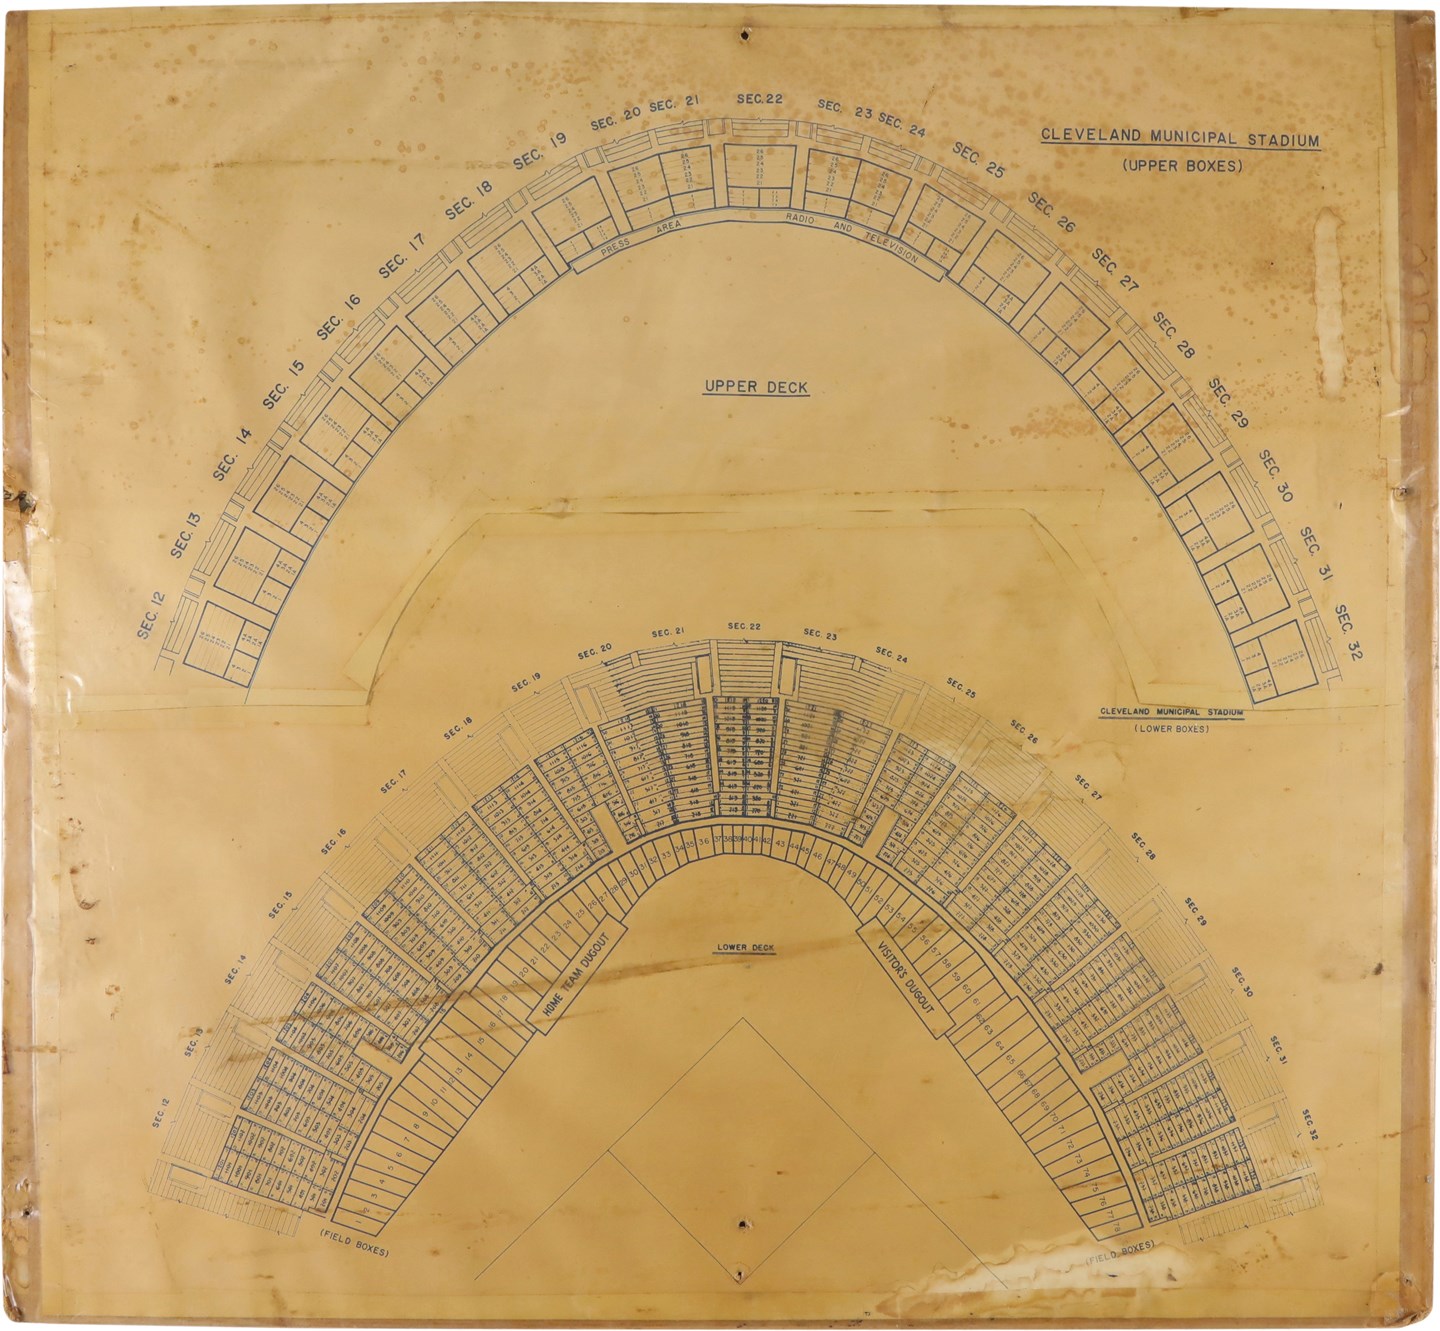 Baseball Memorabilia - Cleveland Stadium Blueprint That Hung in Stadium